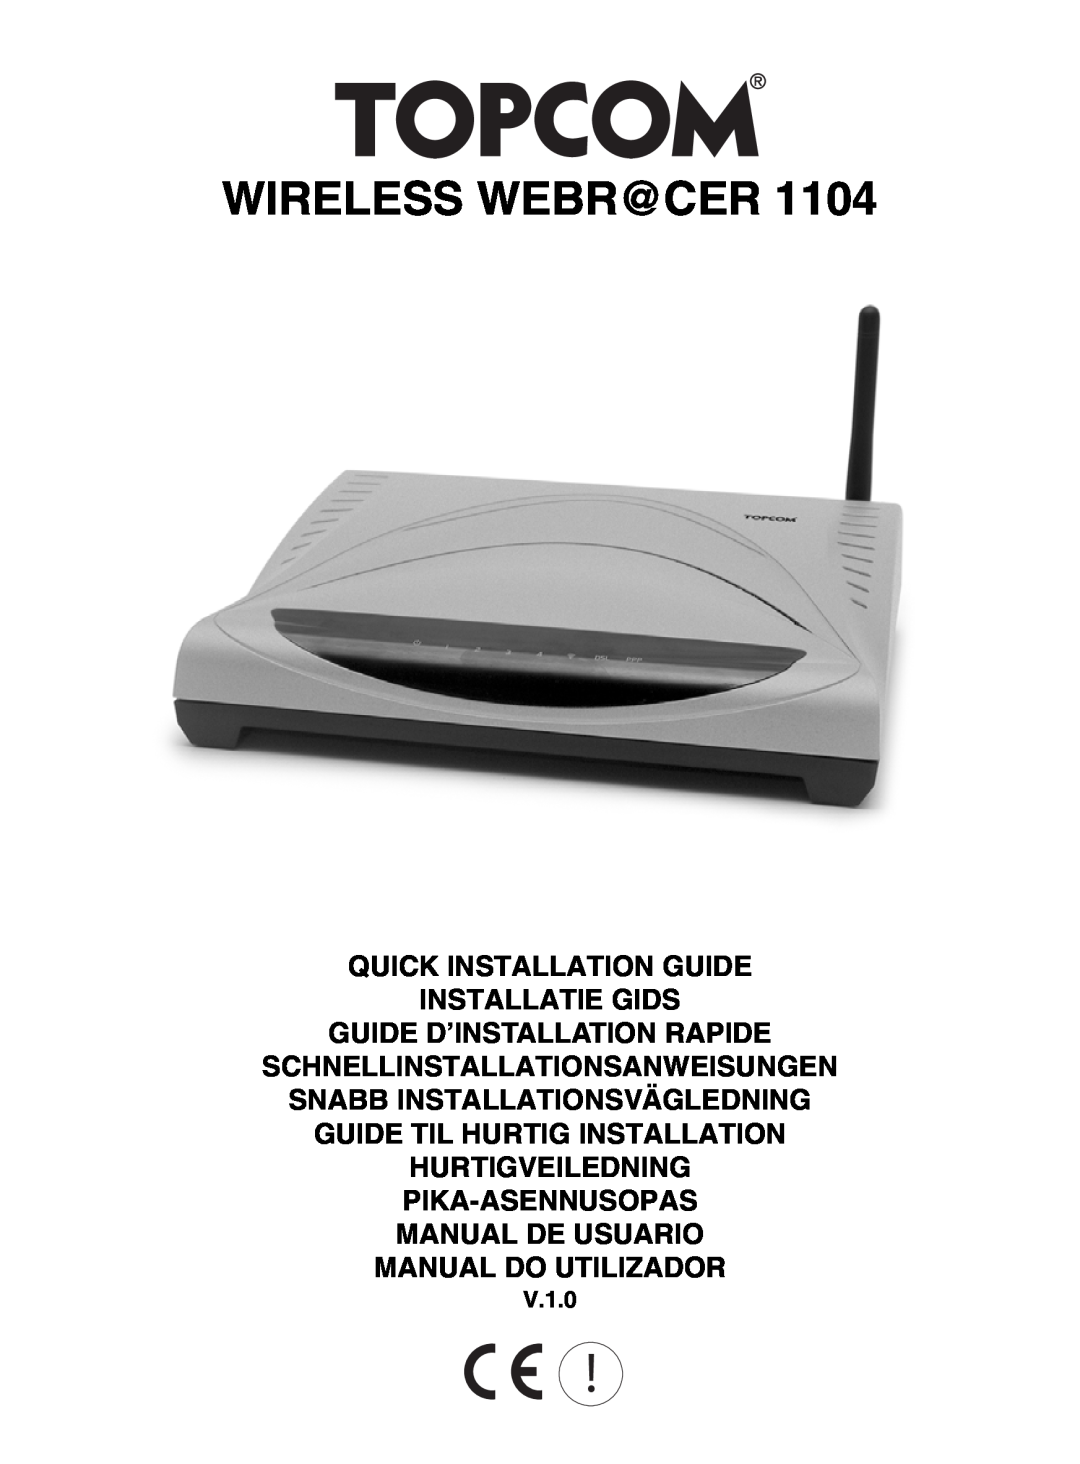 Topcom 1104 manual do utilizador Wireless Webr@Cer, Quick Installation Guide Installatie Gids Guide D’Installation Rapide 